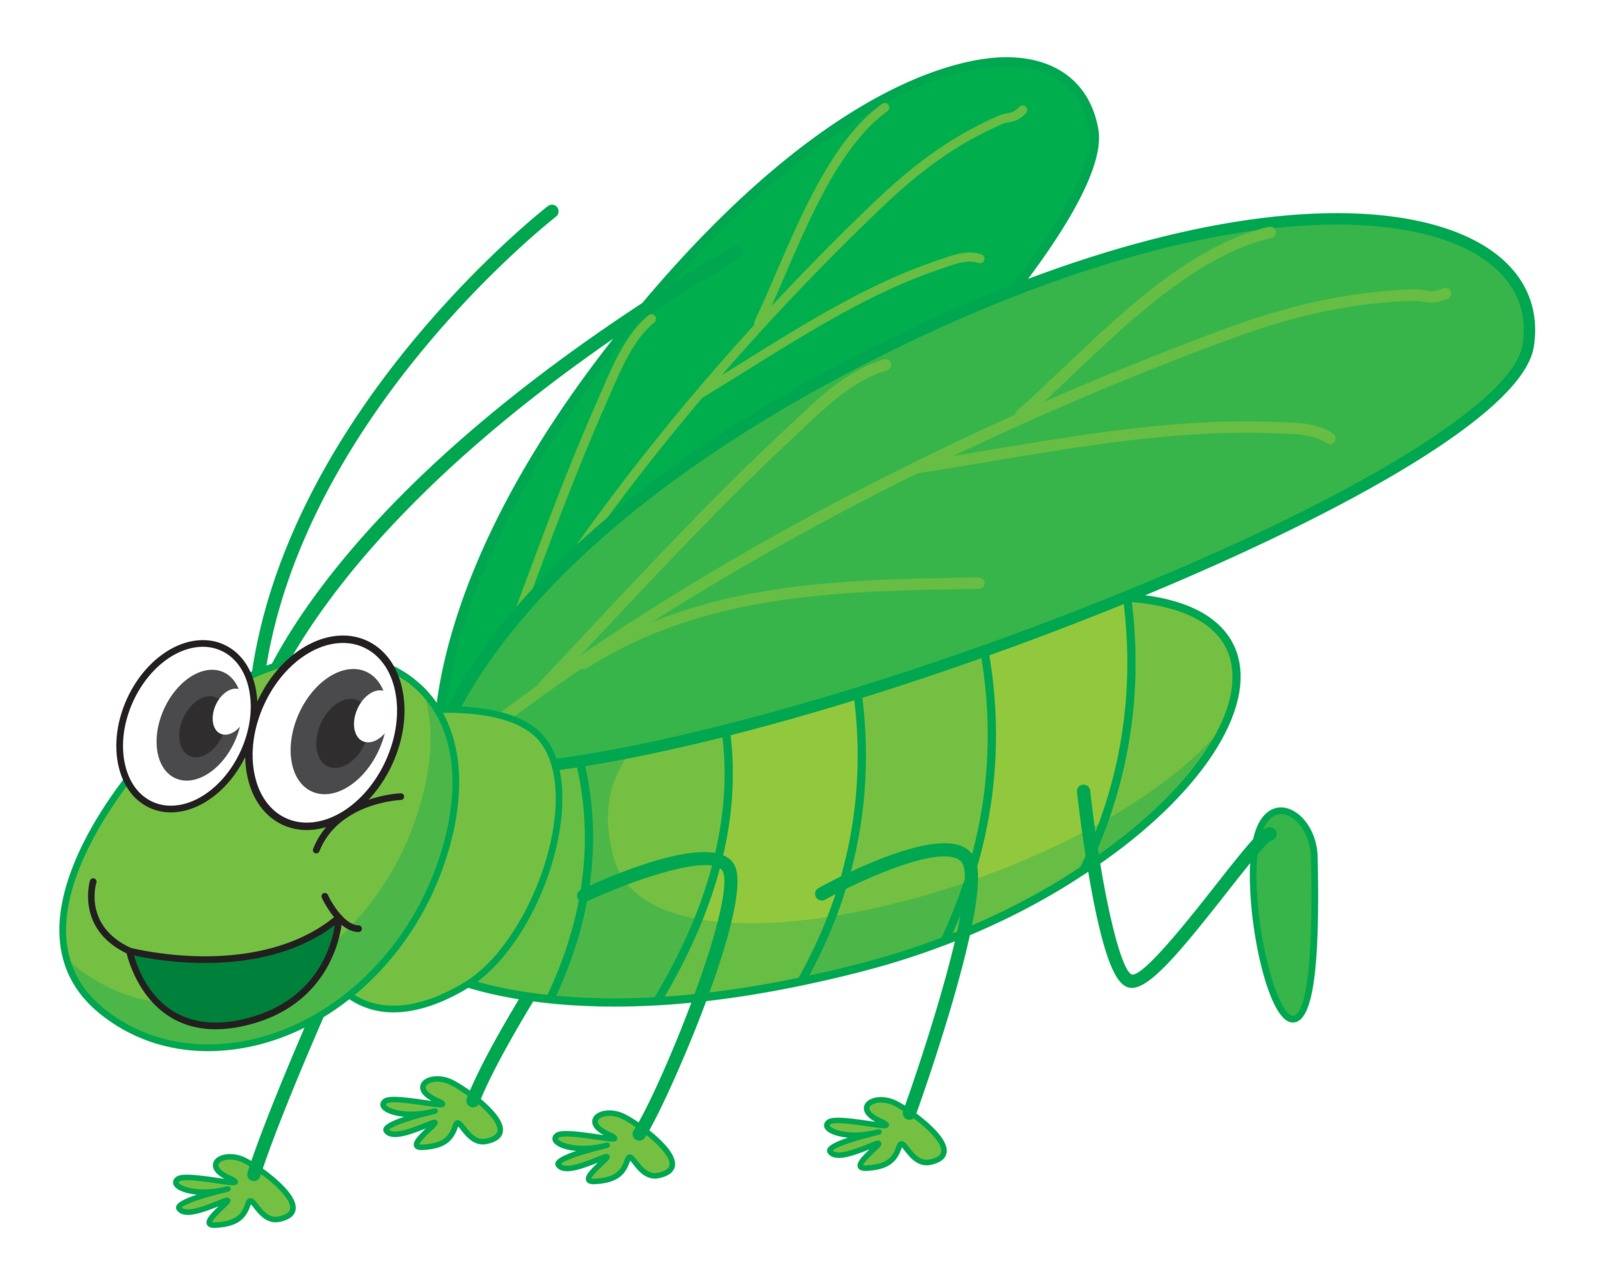 Illustration of a smiling grasshopper on a white background